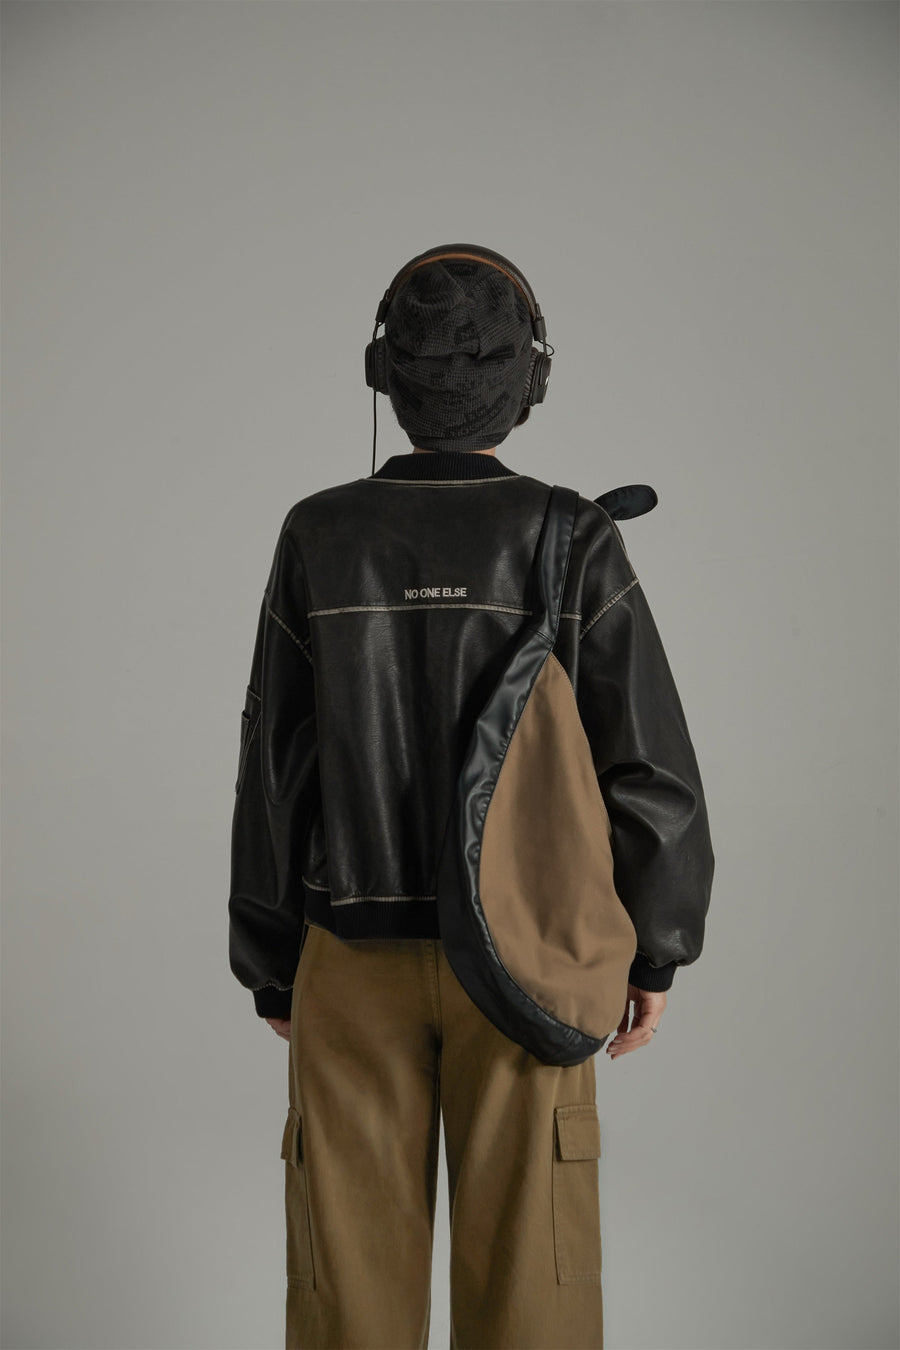 CHUU Lined Leather Boxy Jacket